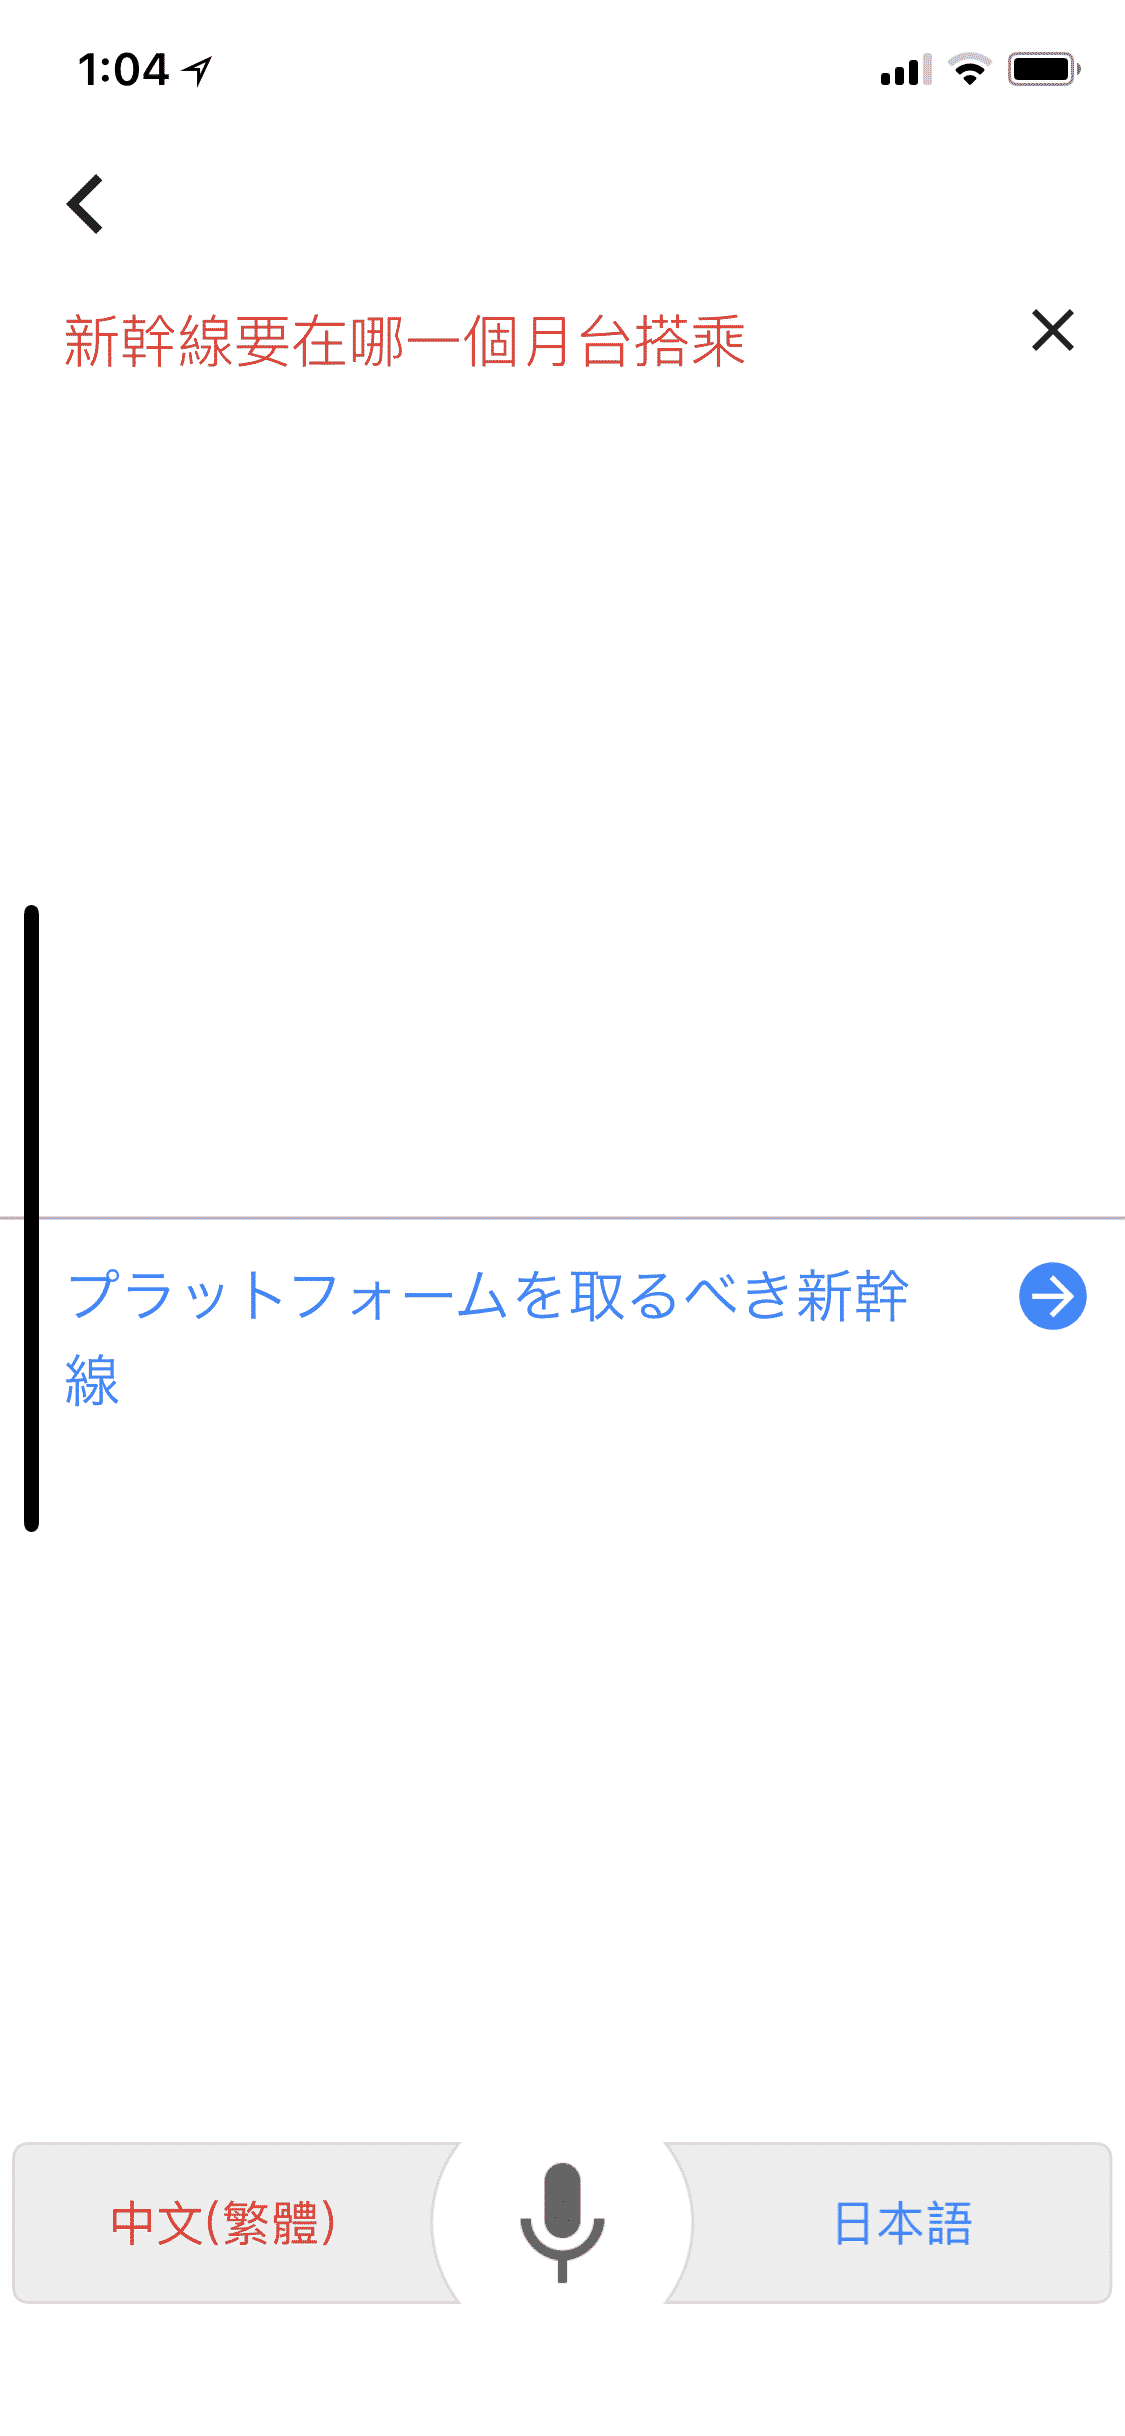 Translator-iOS-Jap04_error